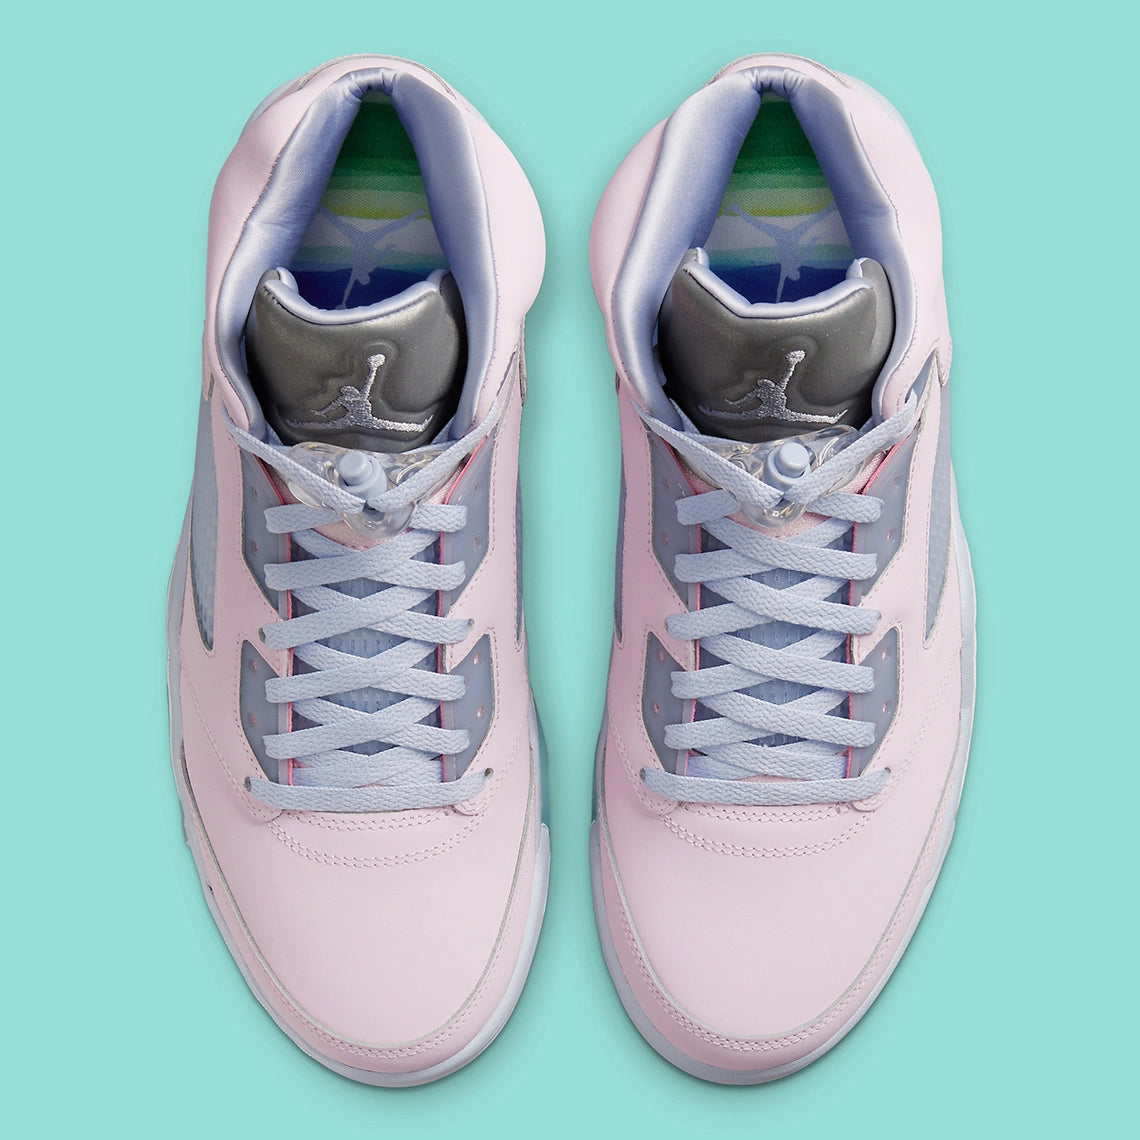 Sneakers Release – Jordan 5 Retro SE “Easter”